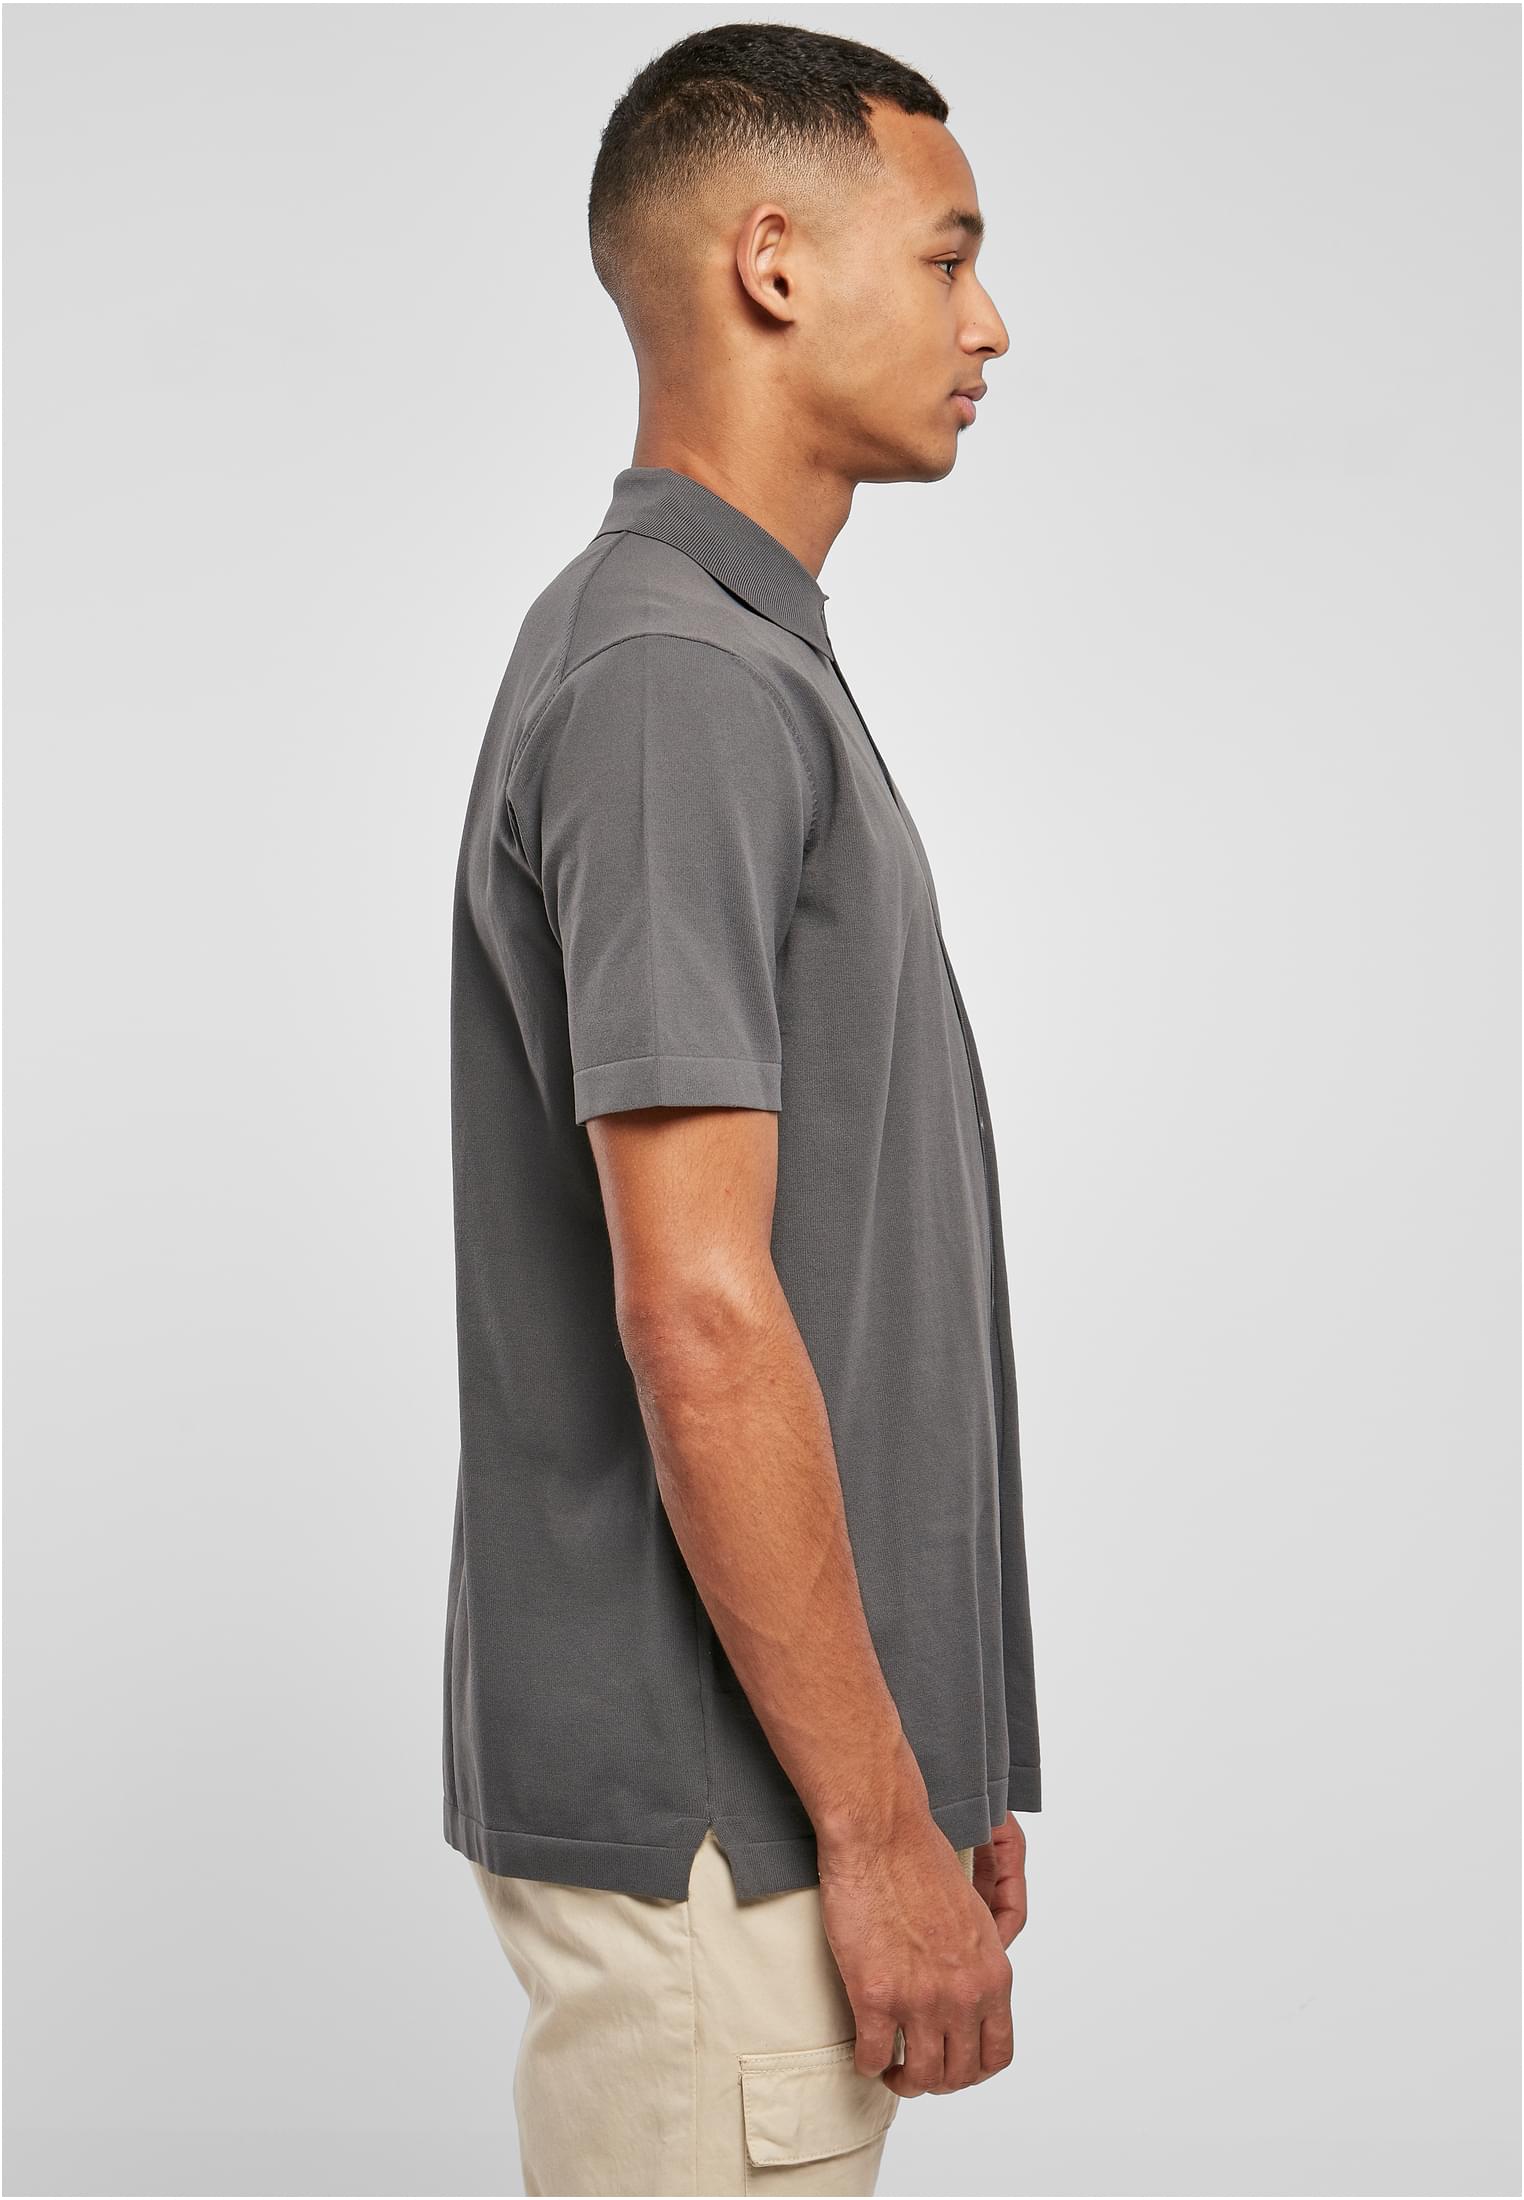 Hemden Knitted Shirt in Farbe darkshadow